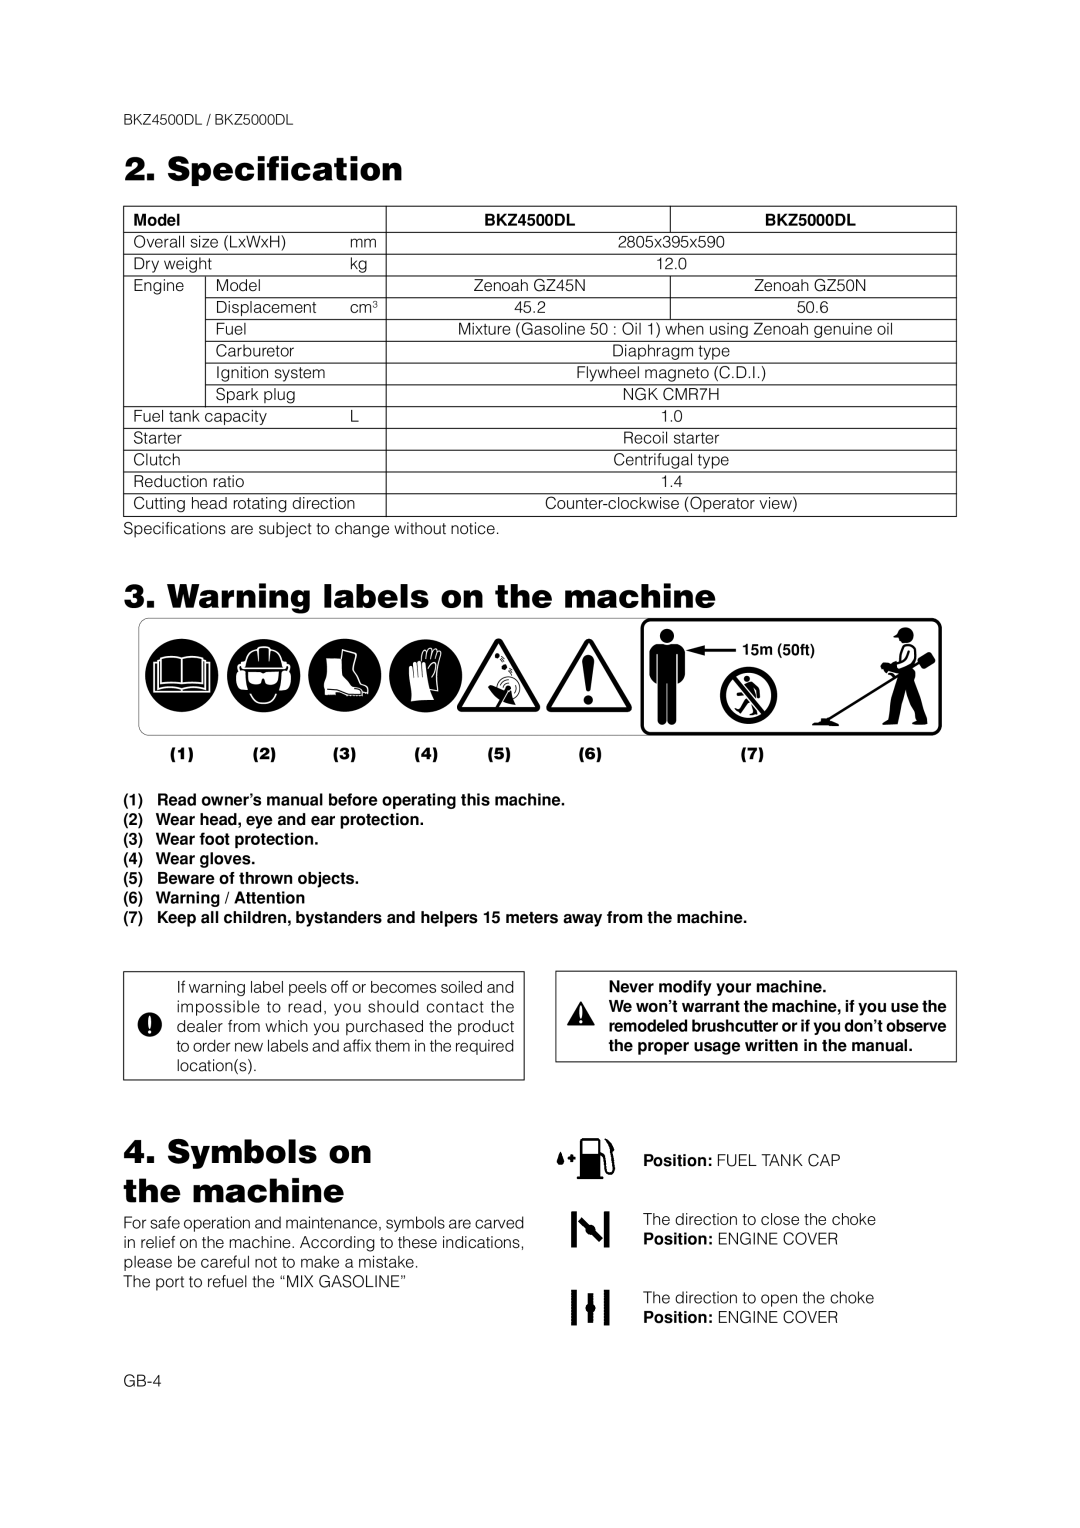 Zenoah BKZ5000DL owner manual Specification, Warning labels on the machine, Symbols on the machine, Model, BKZ4500DL 